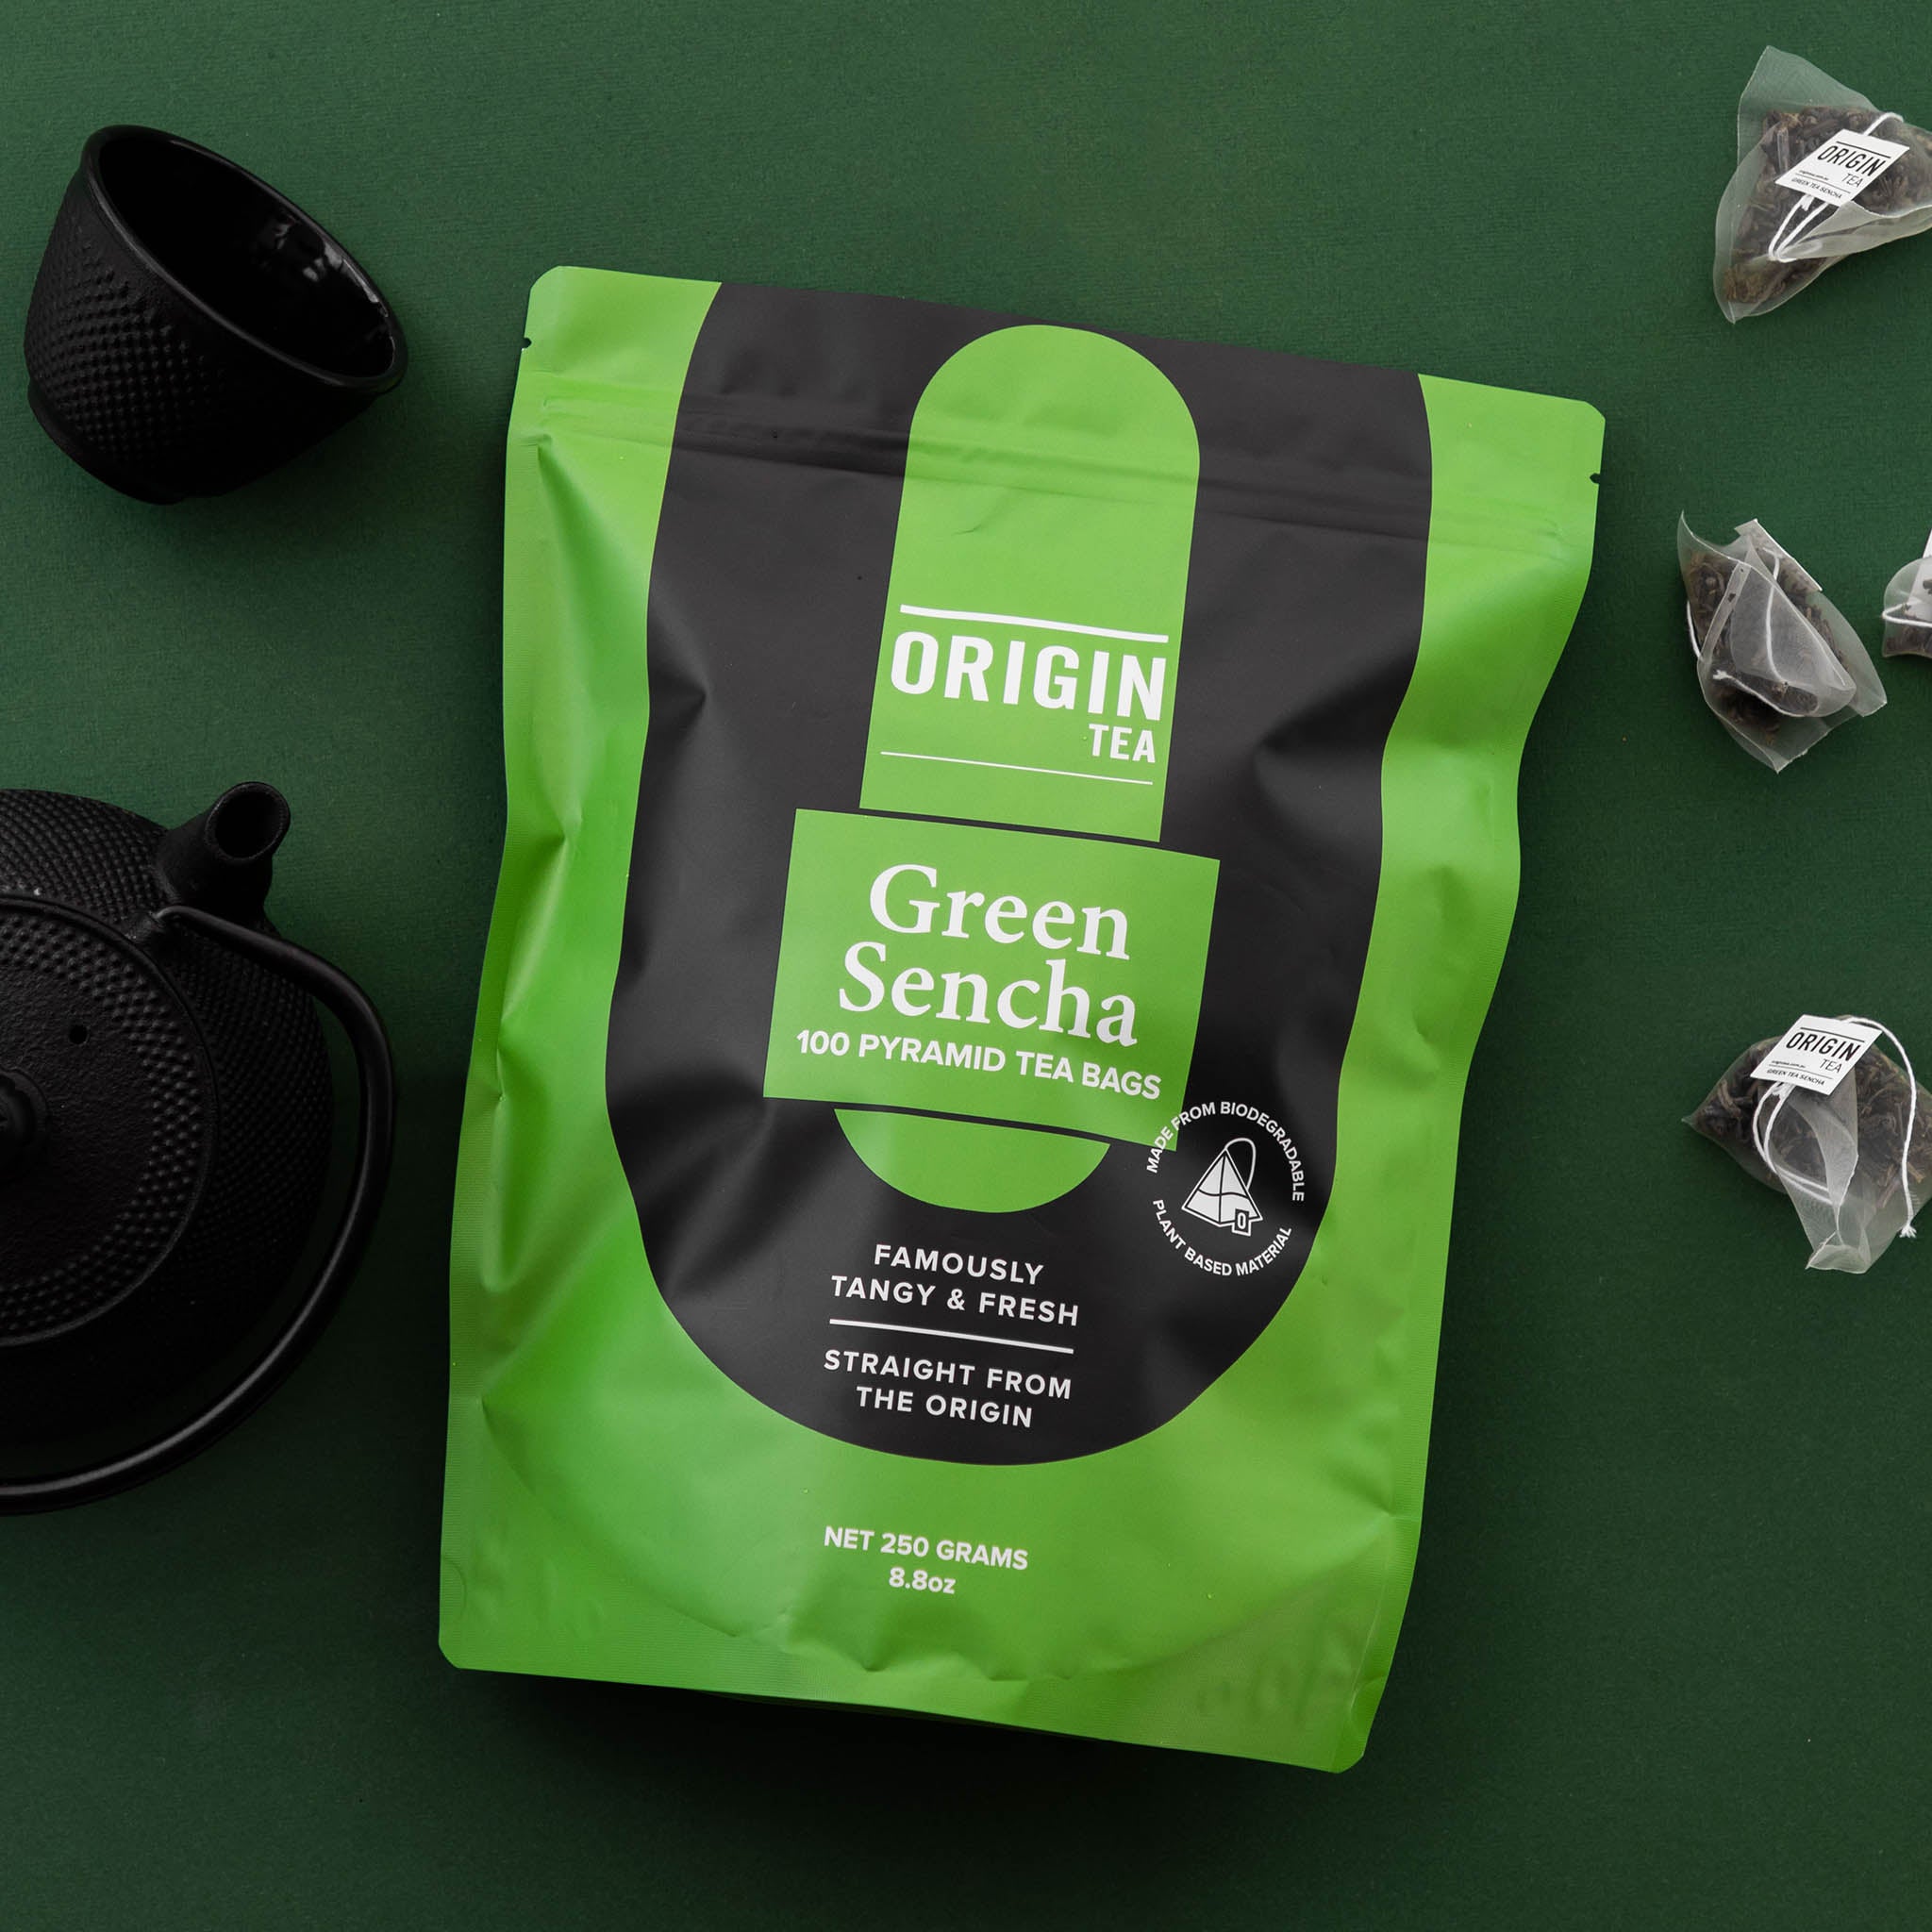 Green Sencha Pyramid Green Tea Bags - 100 Bags - Origin Tea